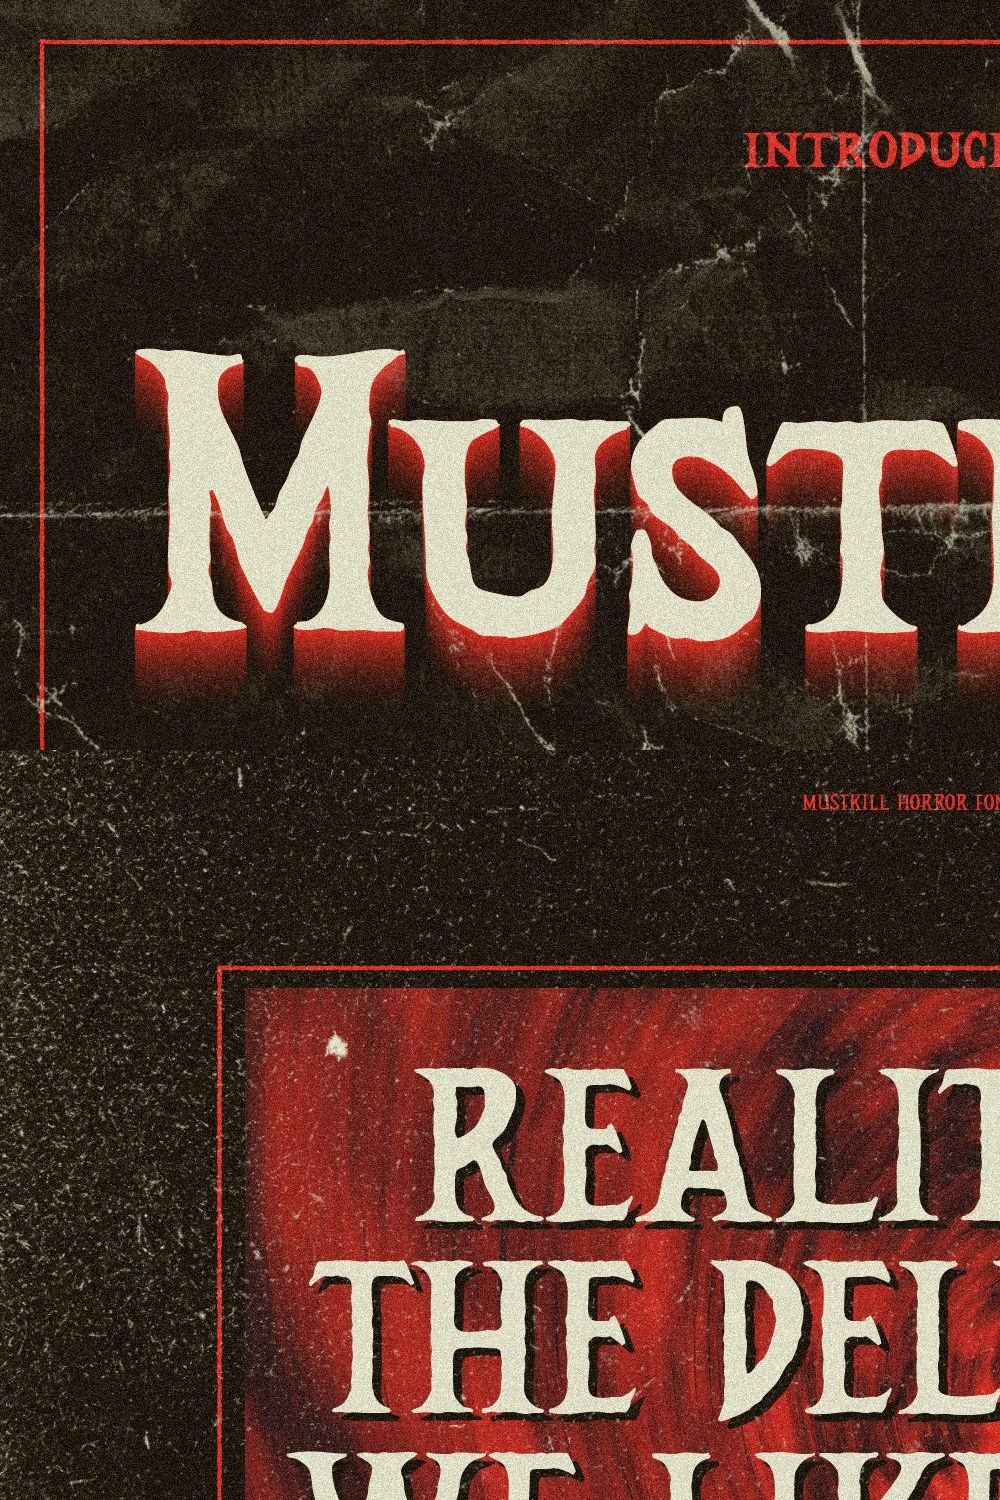 Mustkill - Vintage Horror Font pinterest preview image.